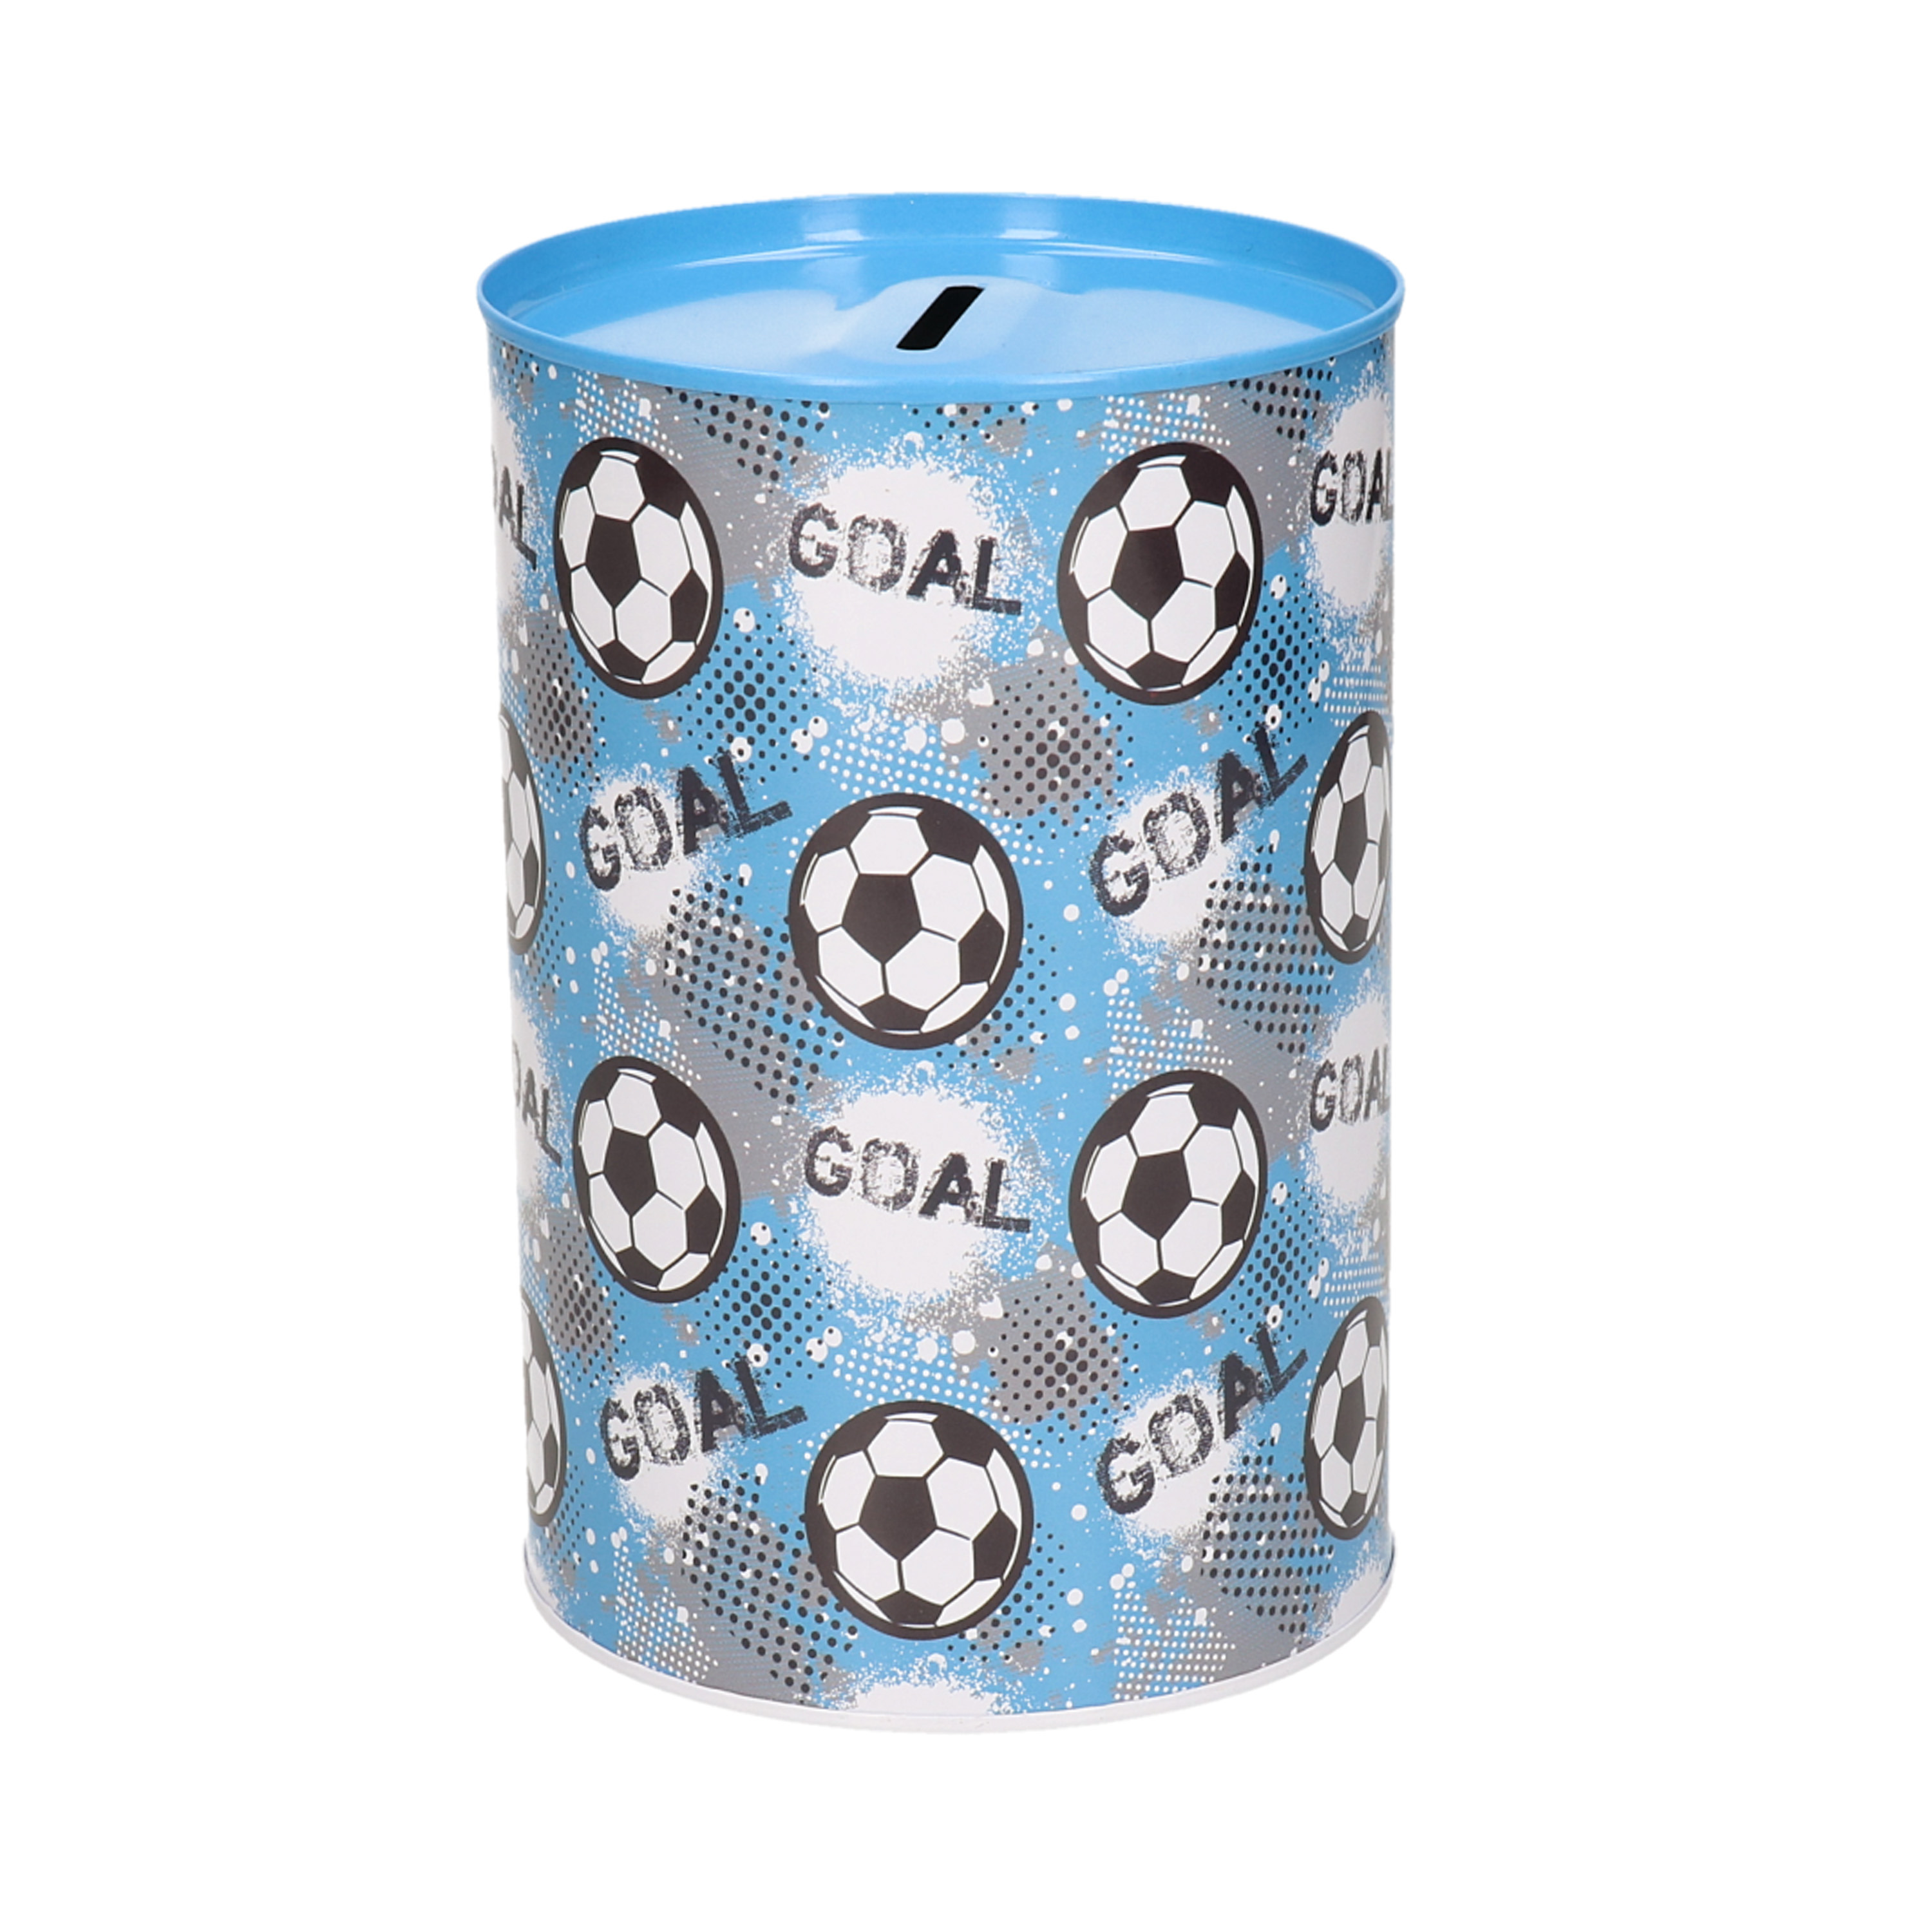 Spaarpot blik goal voetbal blauw 10 x 15 cm